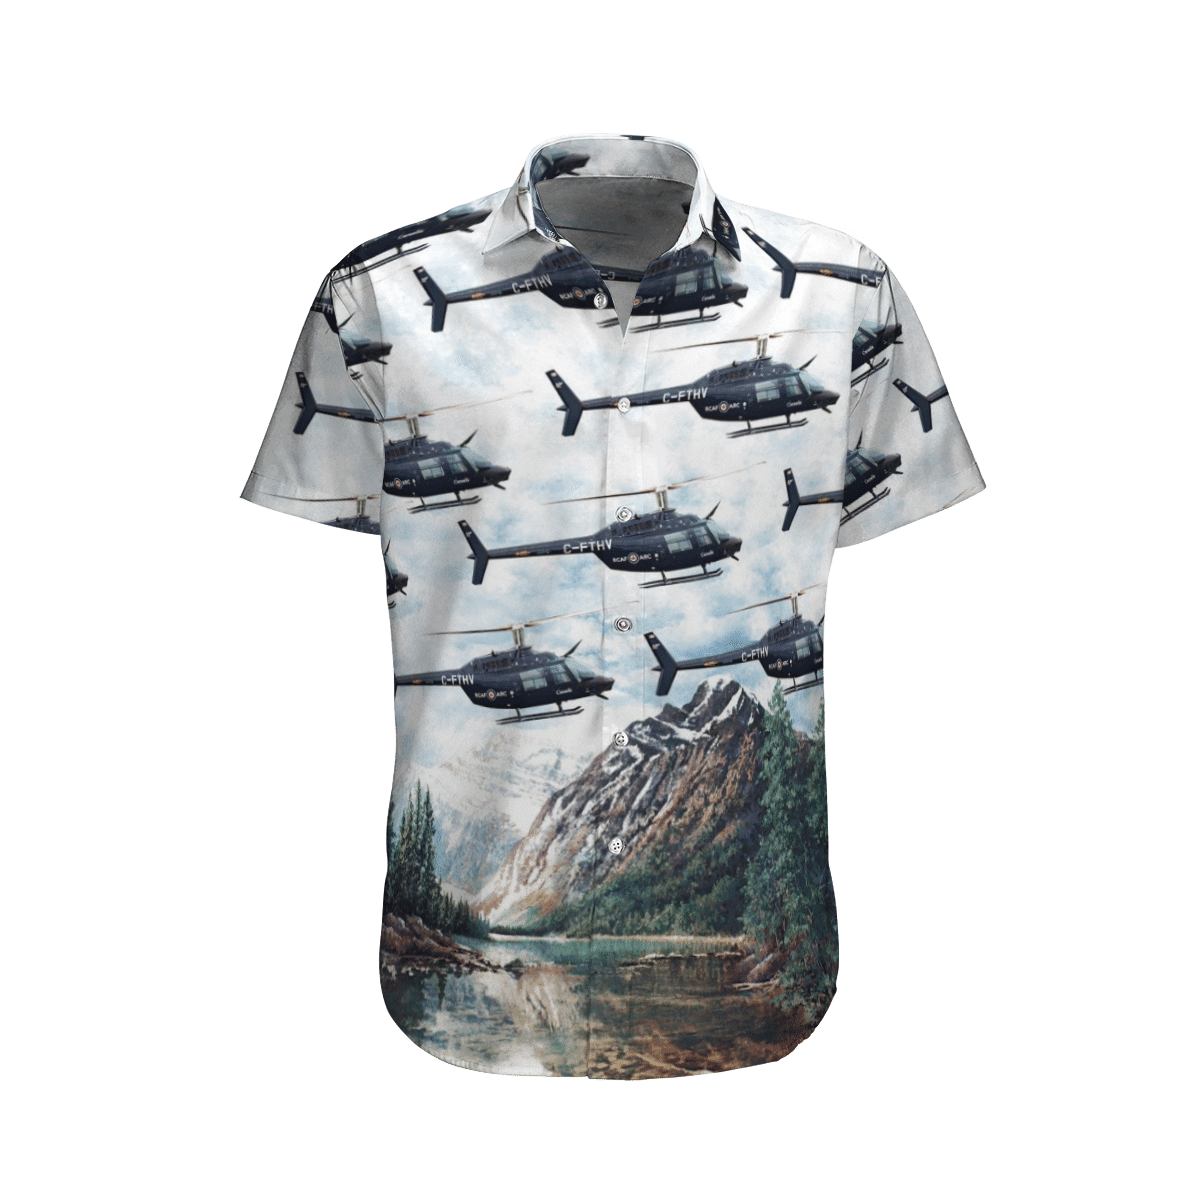 Enjoy your summer with top cool hawaiian shirt below 70